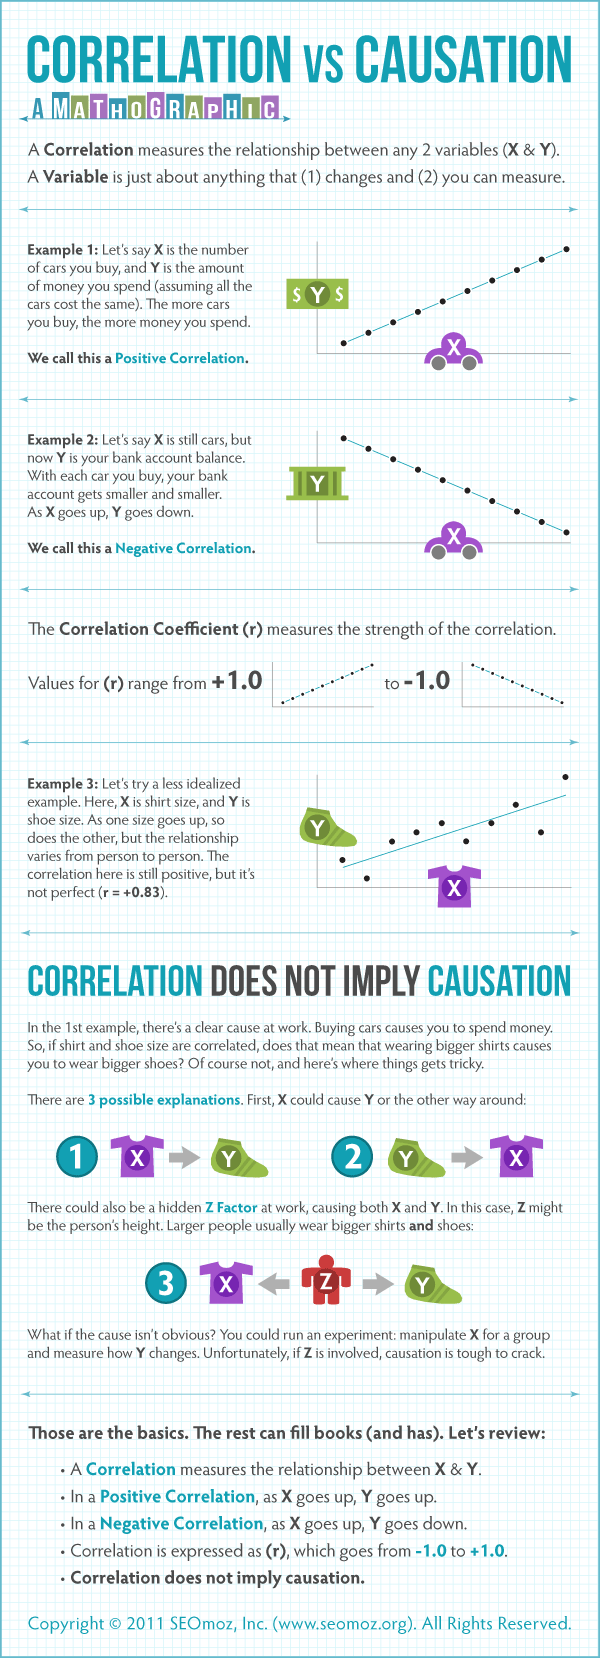 Correlation vs. Causation (A Mathographic)